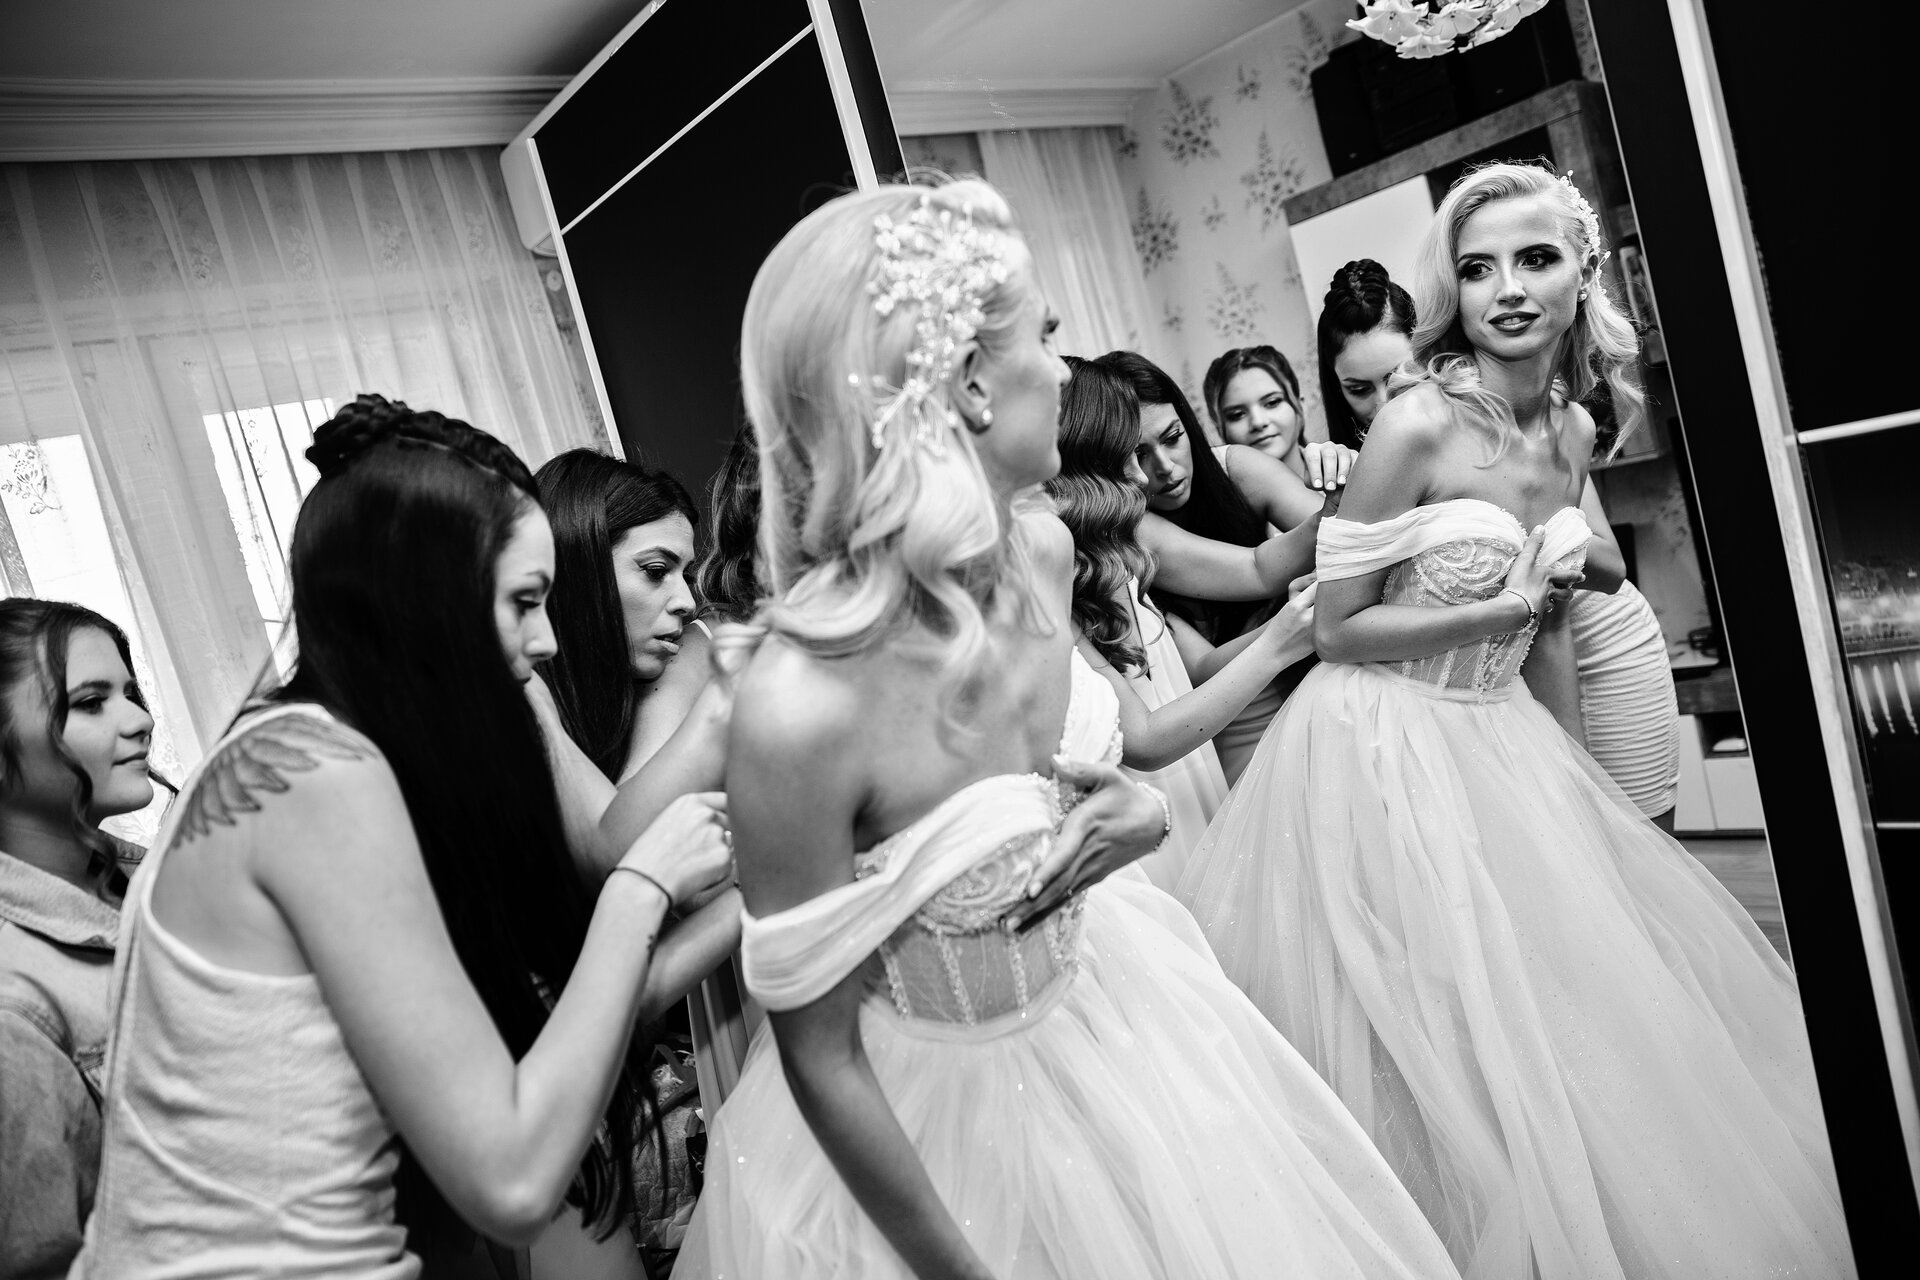 Photo in Wedding | Author Maria Todorova-Marcheva - Mrockerkata | PHOTO FORUM